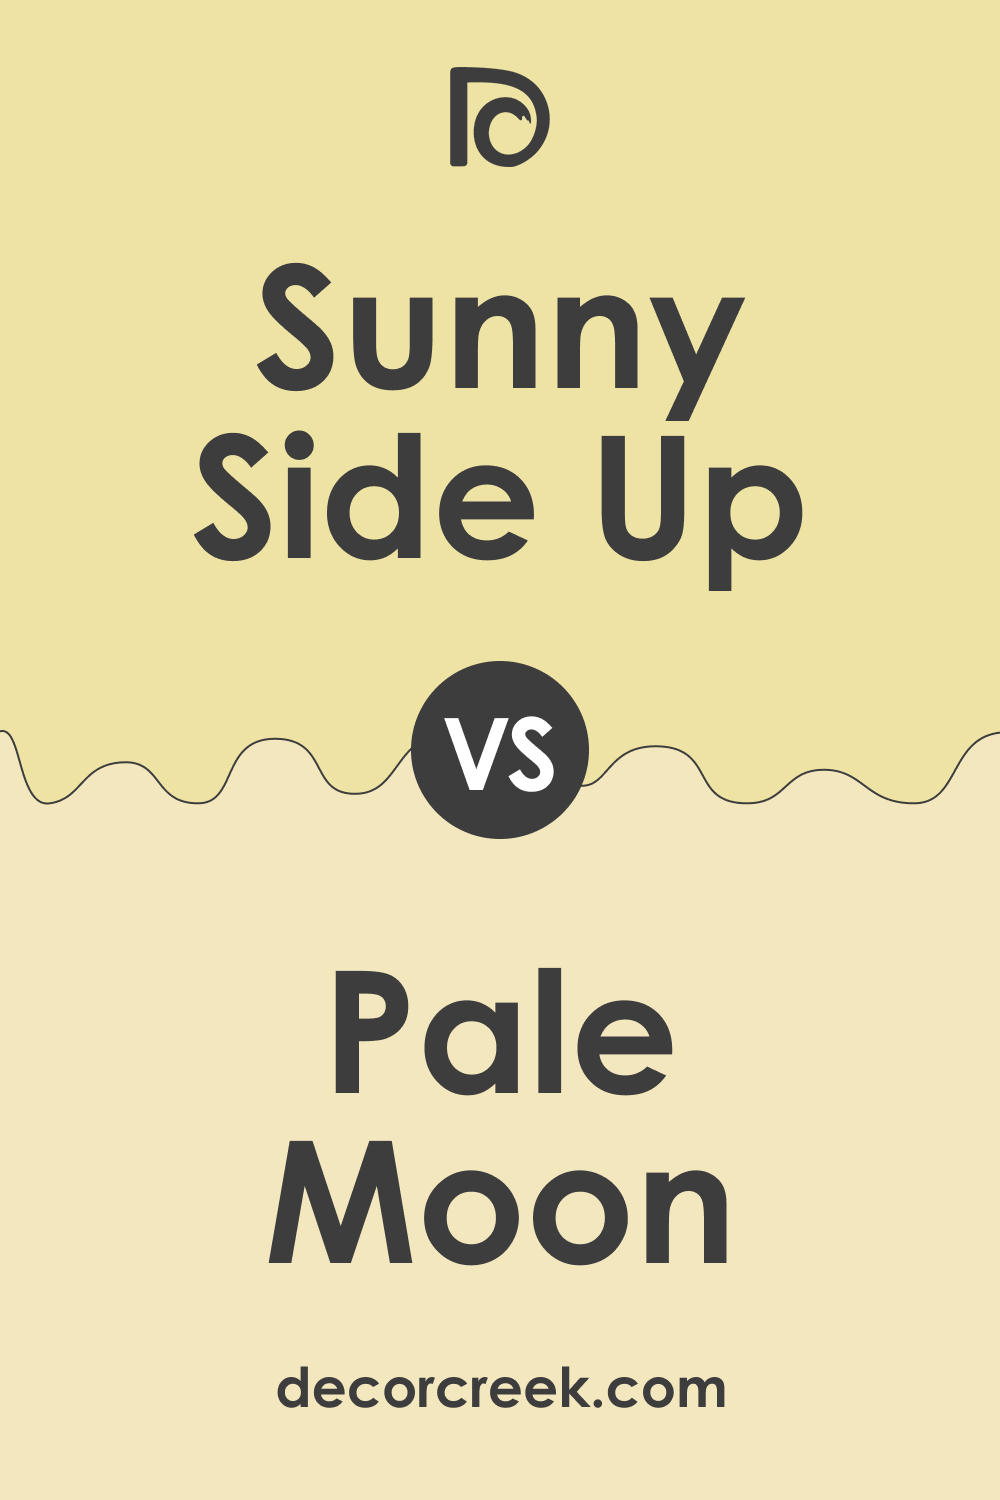 Sunny Side Up 367 vs. OC-108 Pale Moon